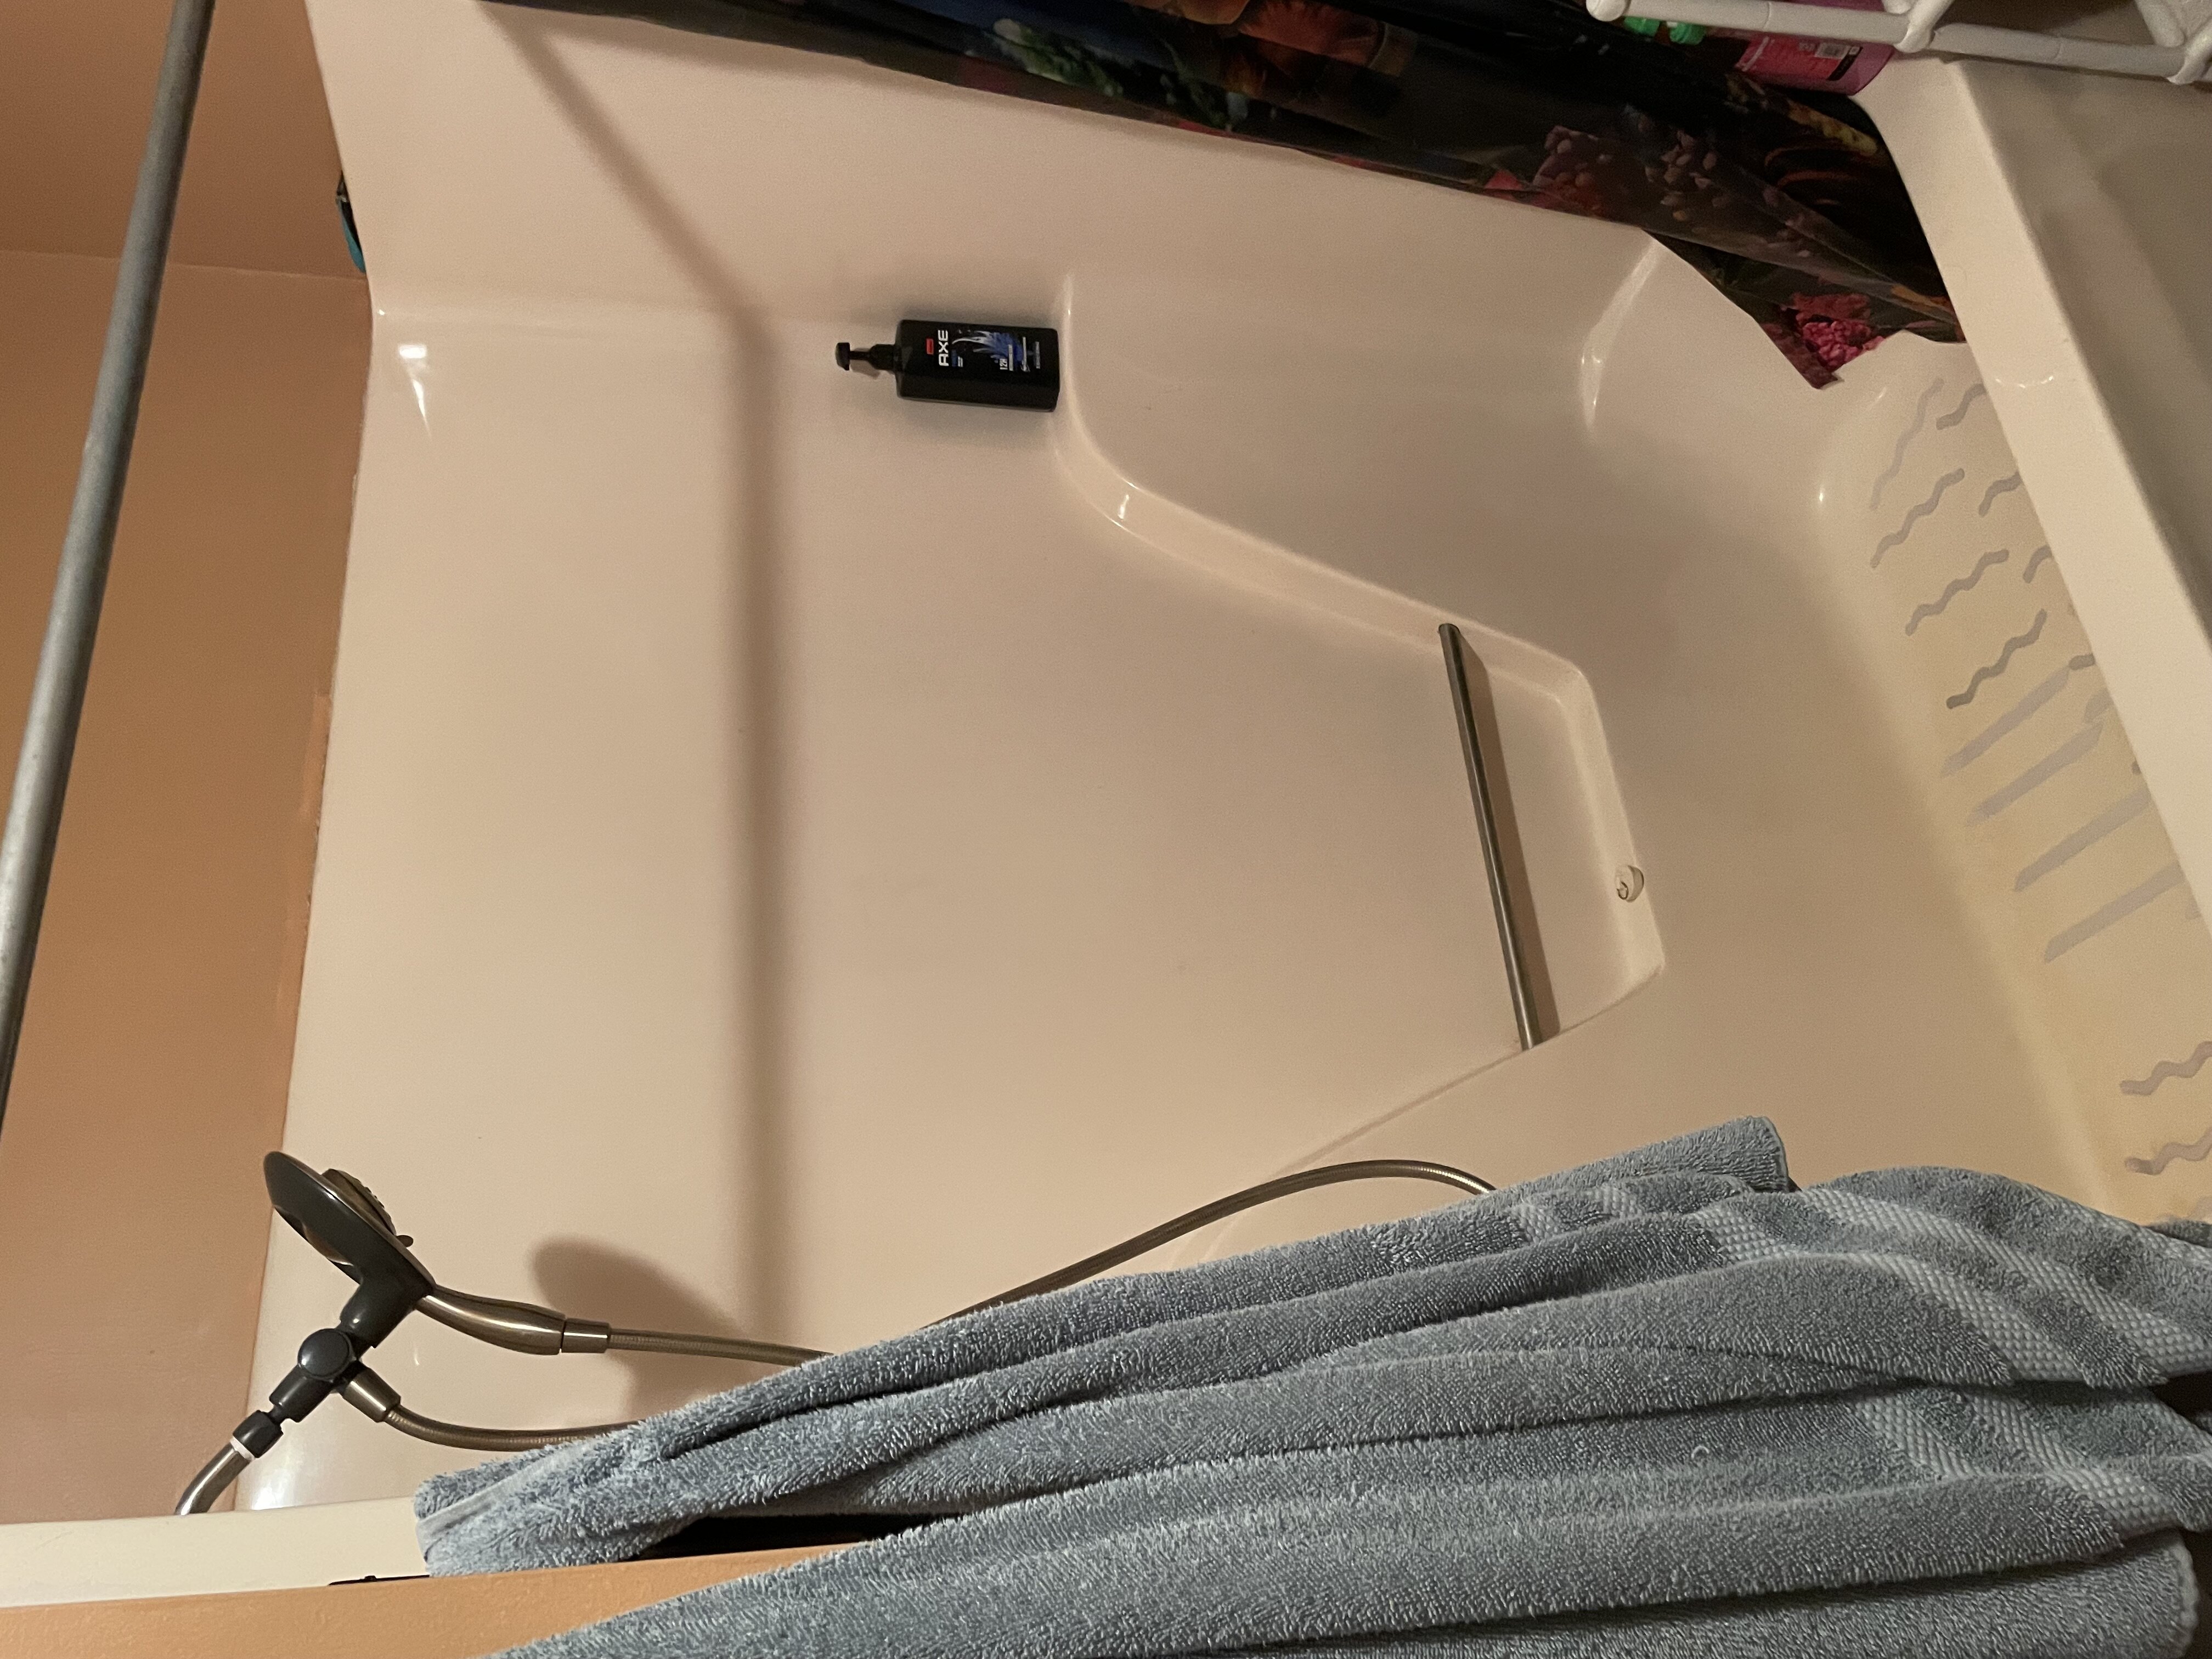 Old fiberglass tub/shower combo